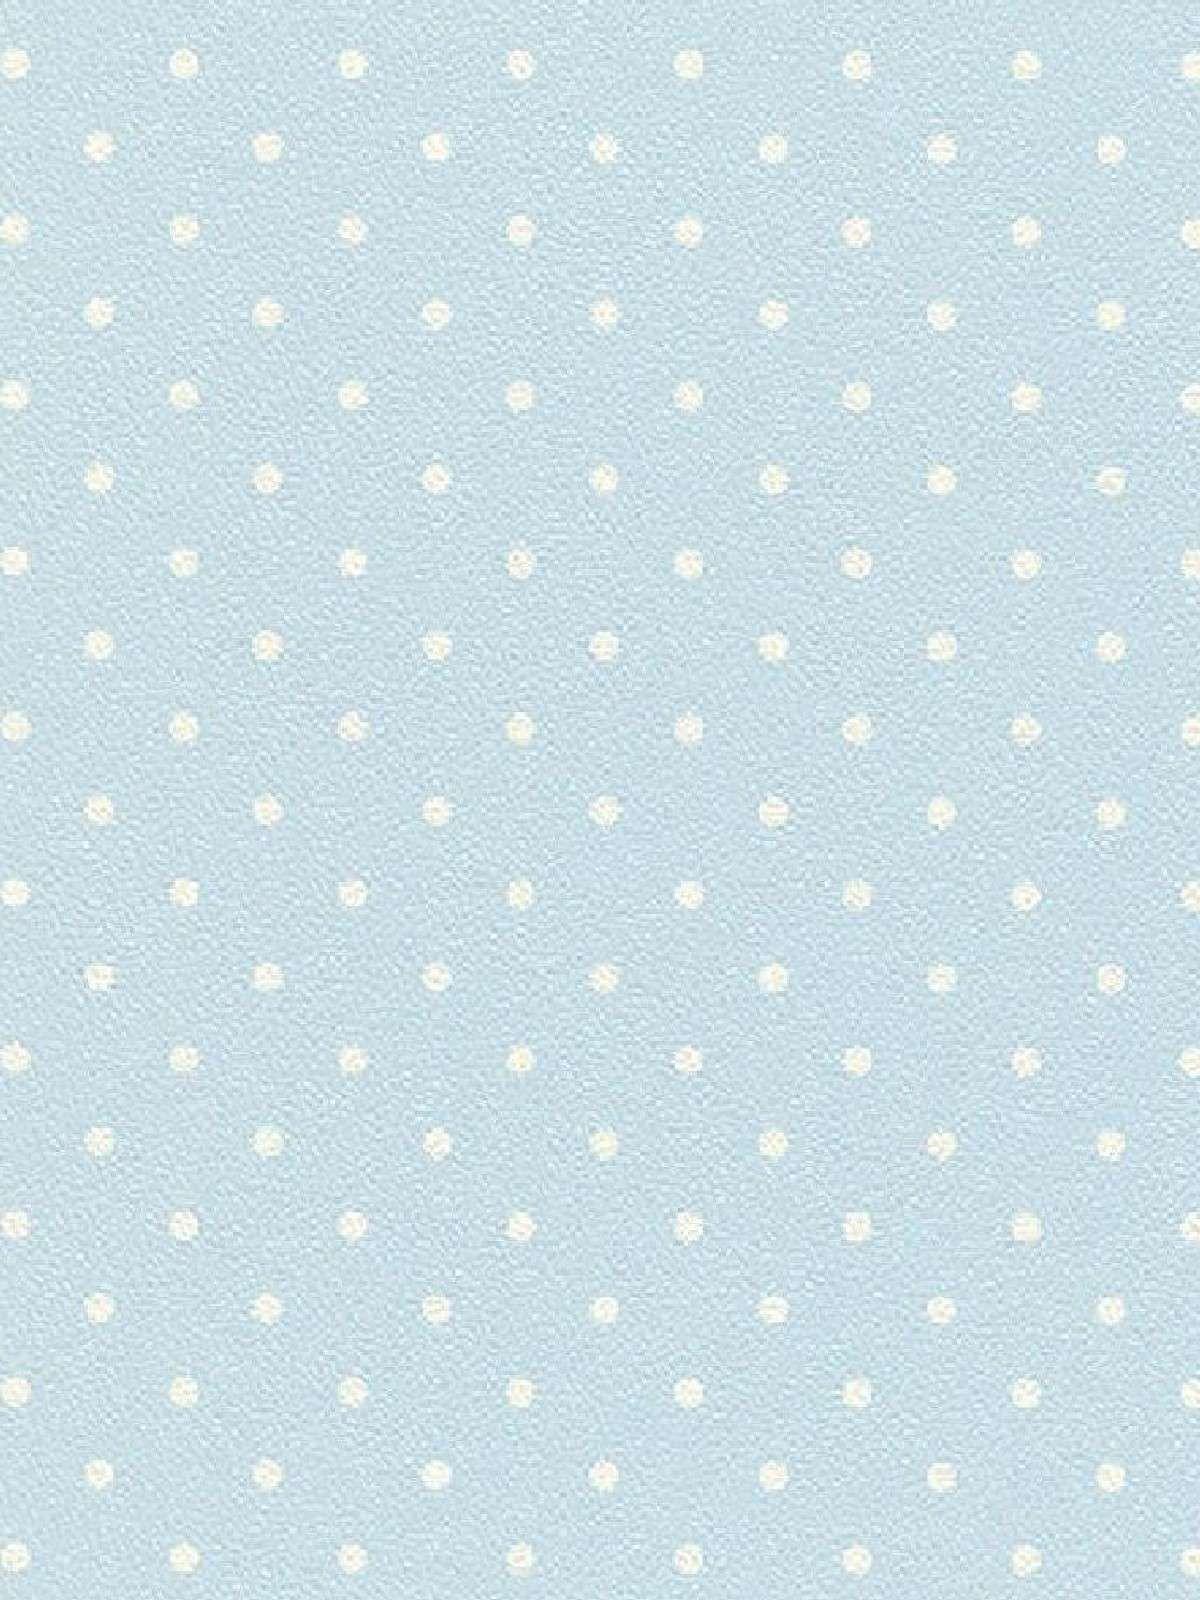 Pastel Polka Dot Backgrounds : Cute Pastel Polka Dot Wallpaper Stock ...